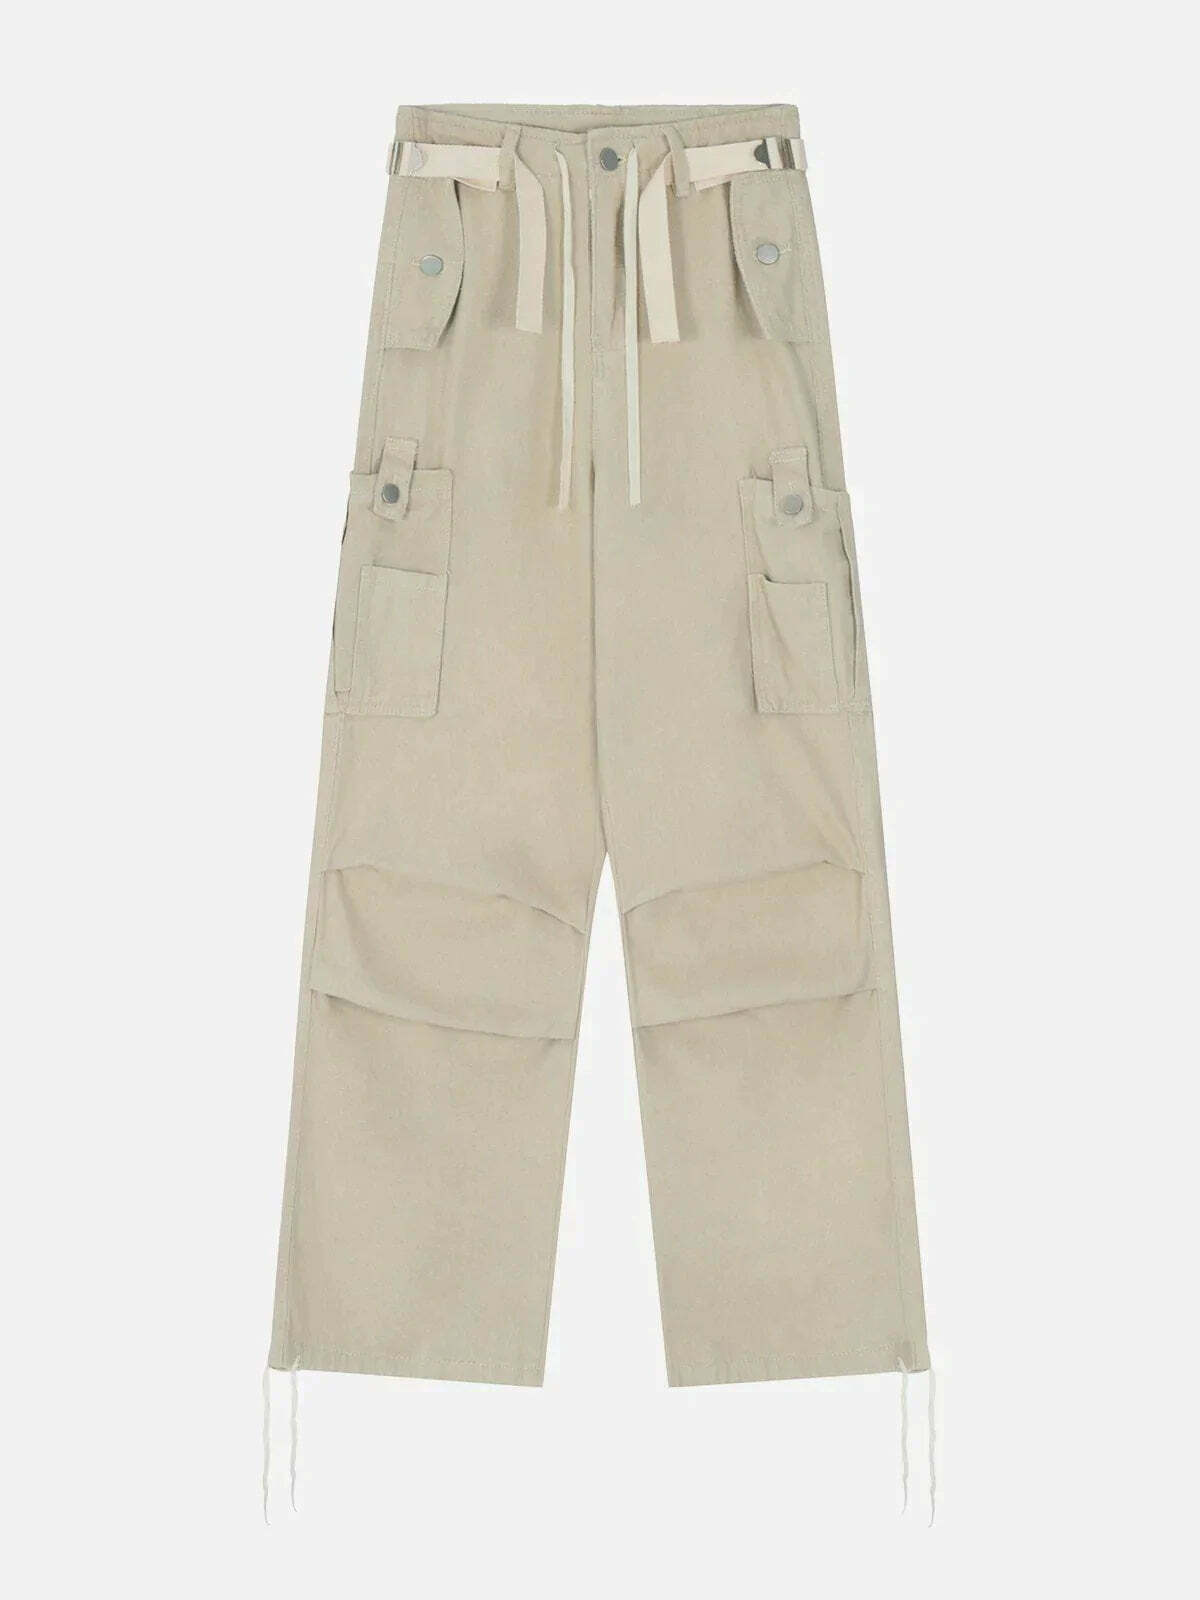 retro wideleg cargo pants edgy & functional streetwear 7633